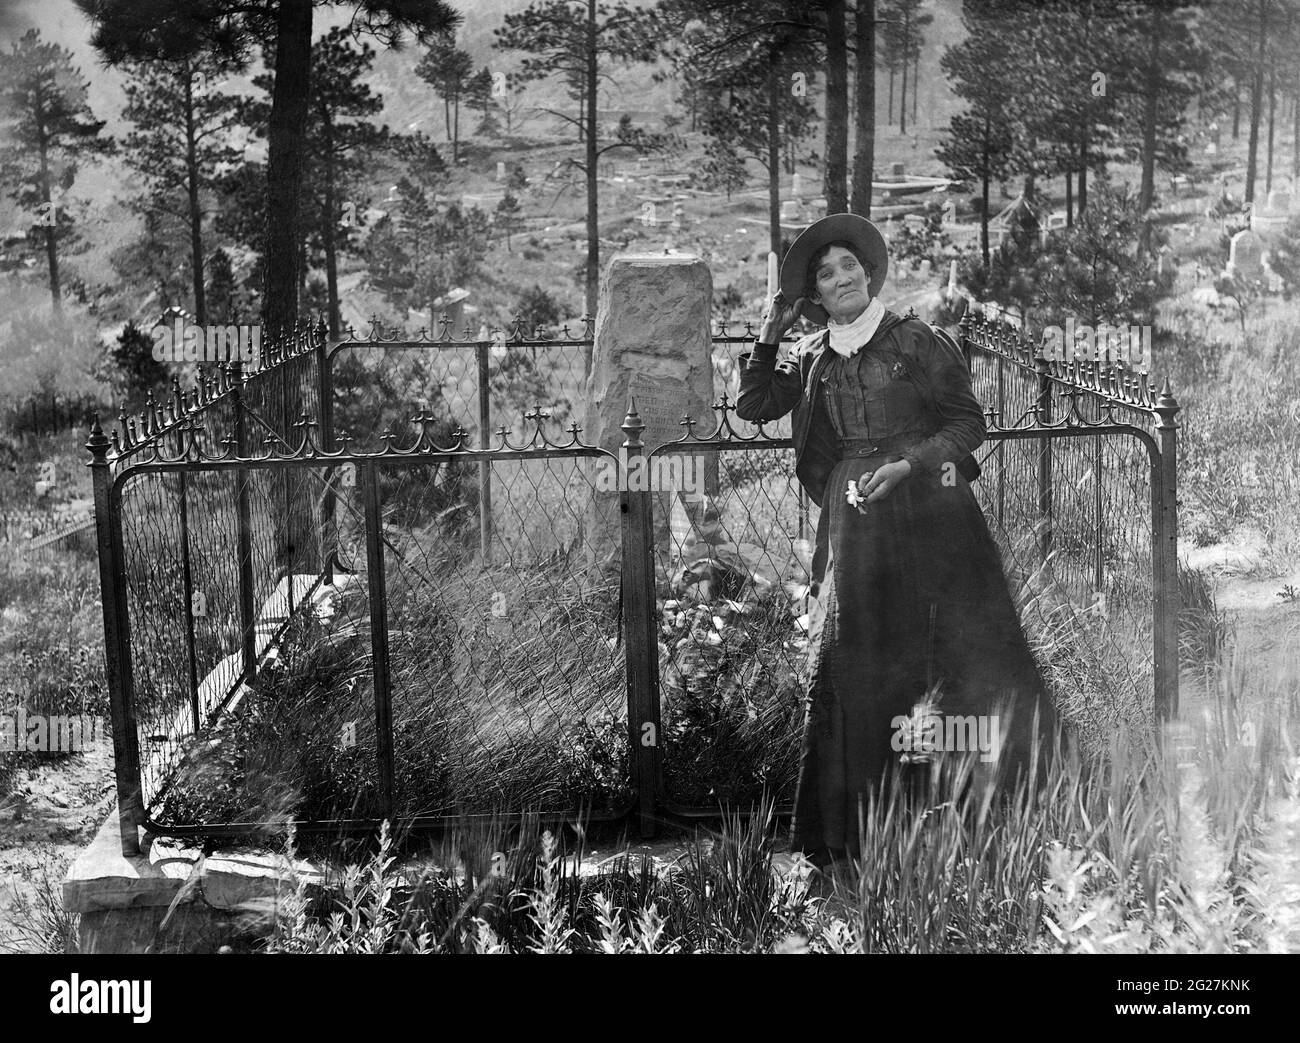 Calamity Jane standing next to Wild Bill Hickok's grave in Deadwood, South Dakota. Stock Photo